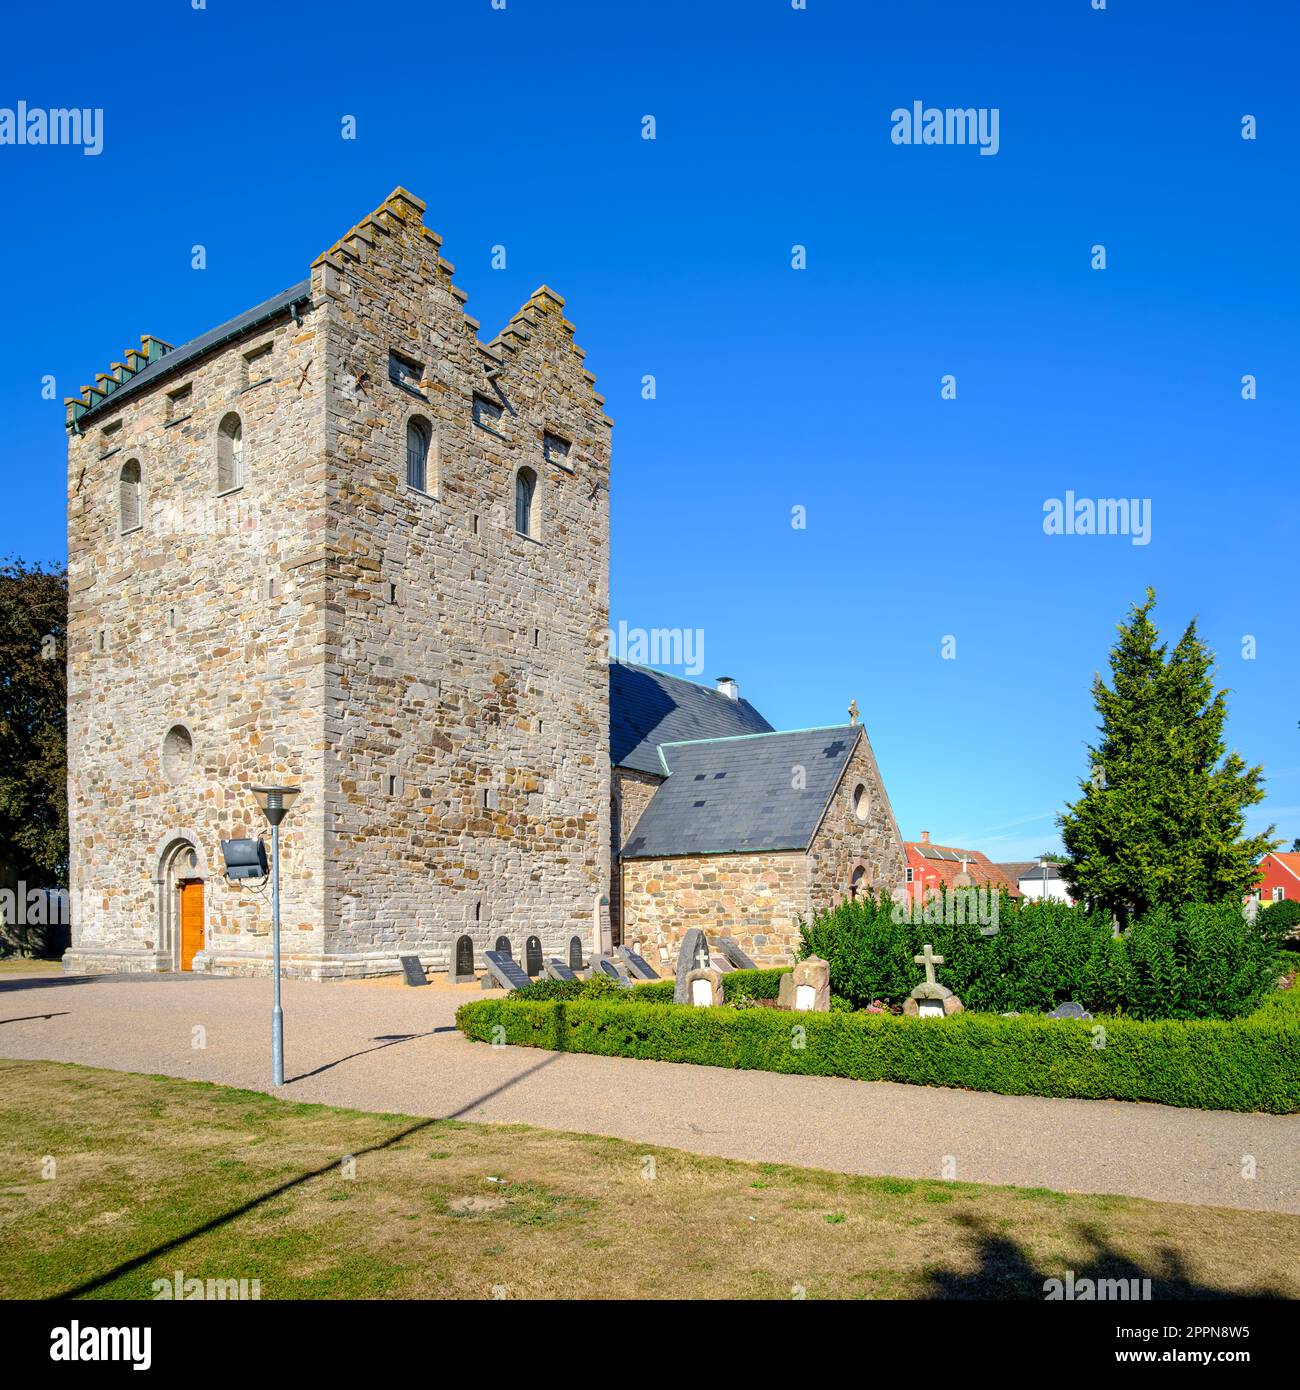 Aa Kirke and churchyard, the church of Aakirkeby, Bornholm Island, Denmark, Scandinavia, Europe. Stock Photo